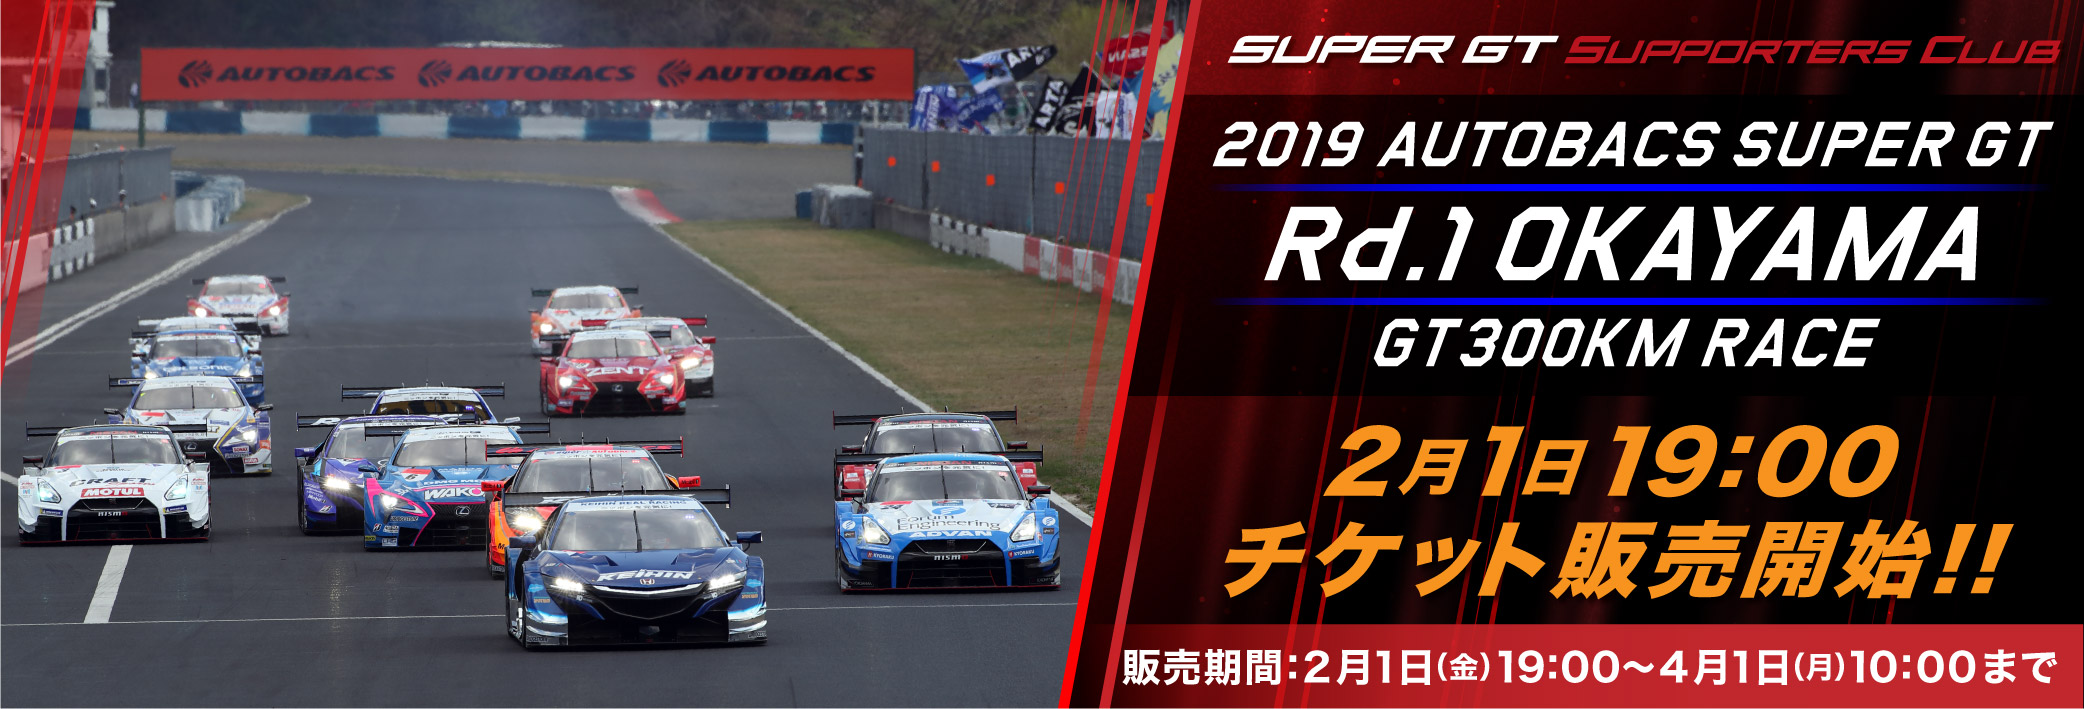 2019 SUPER GT Rd.1 OKAYAMA GT300KM RACE チケット販売のご案内 SUPER GT SQUARE